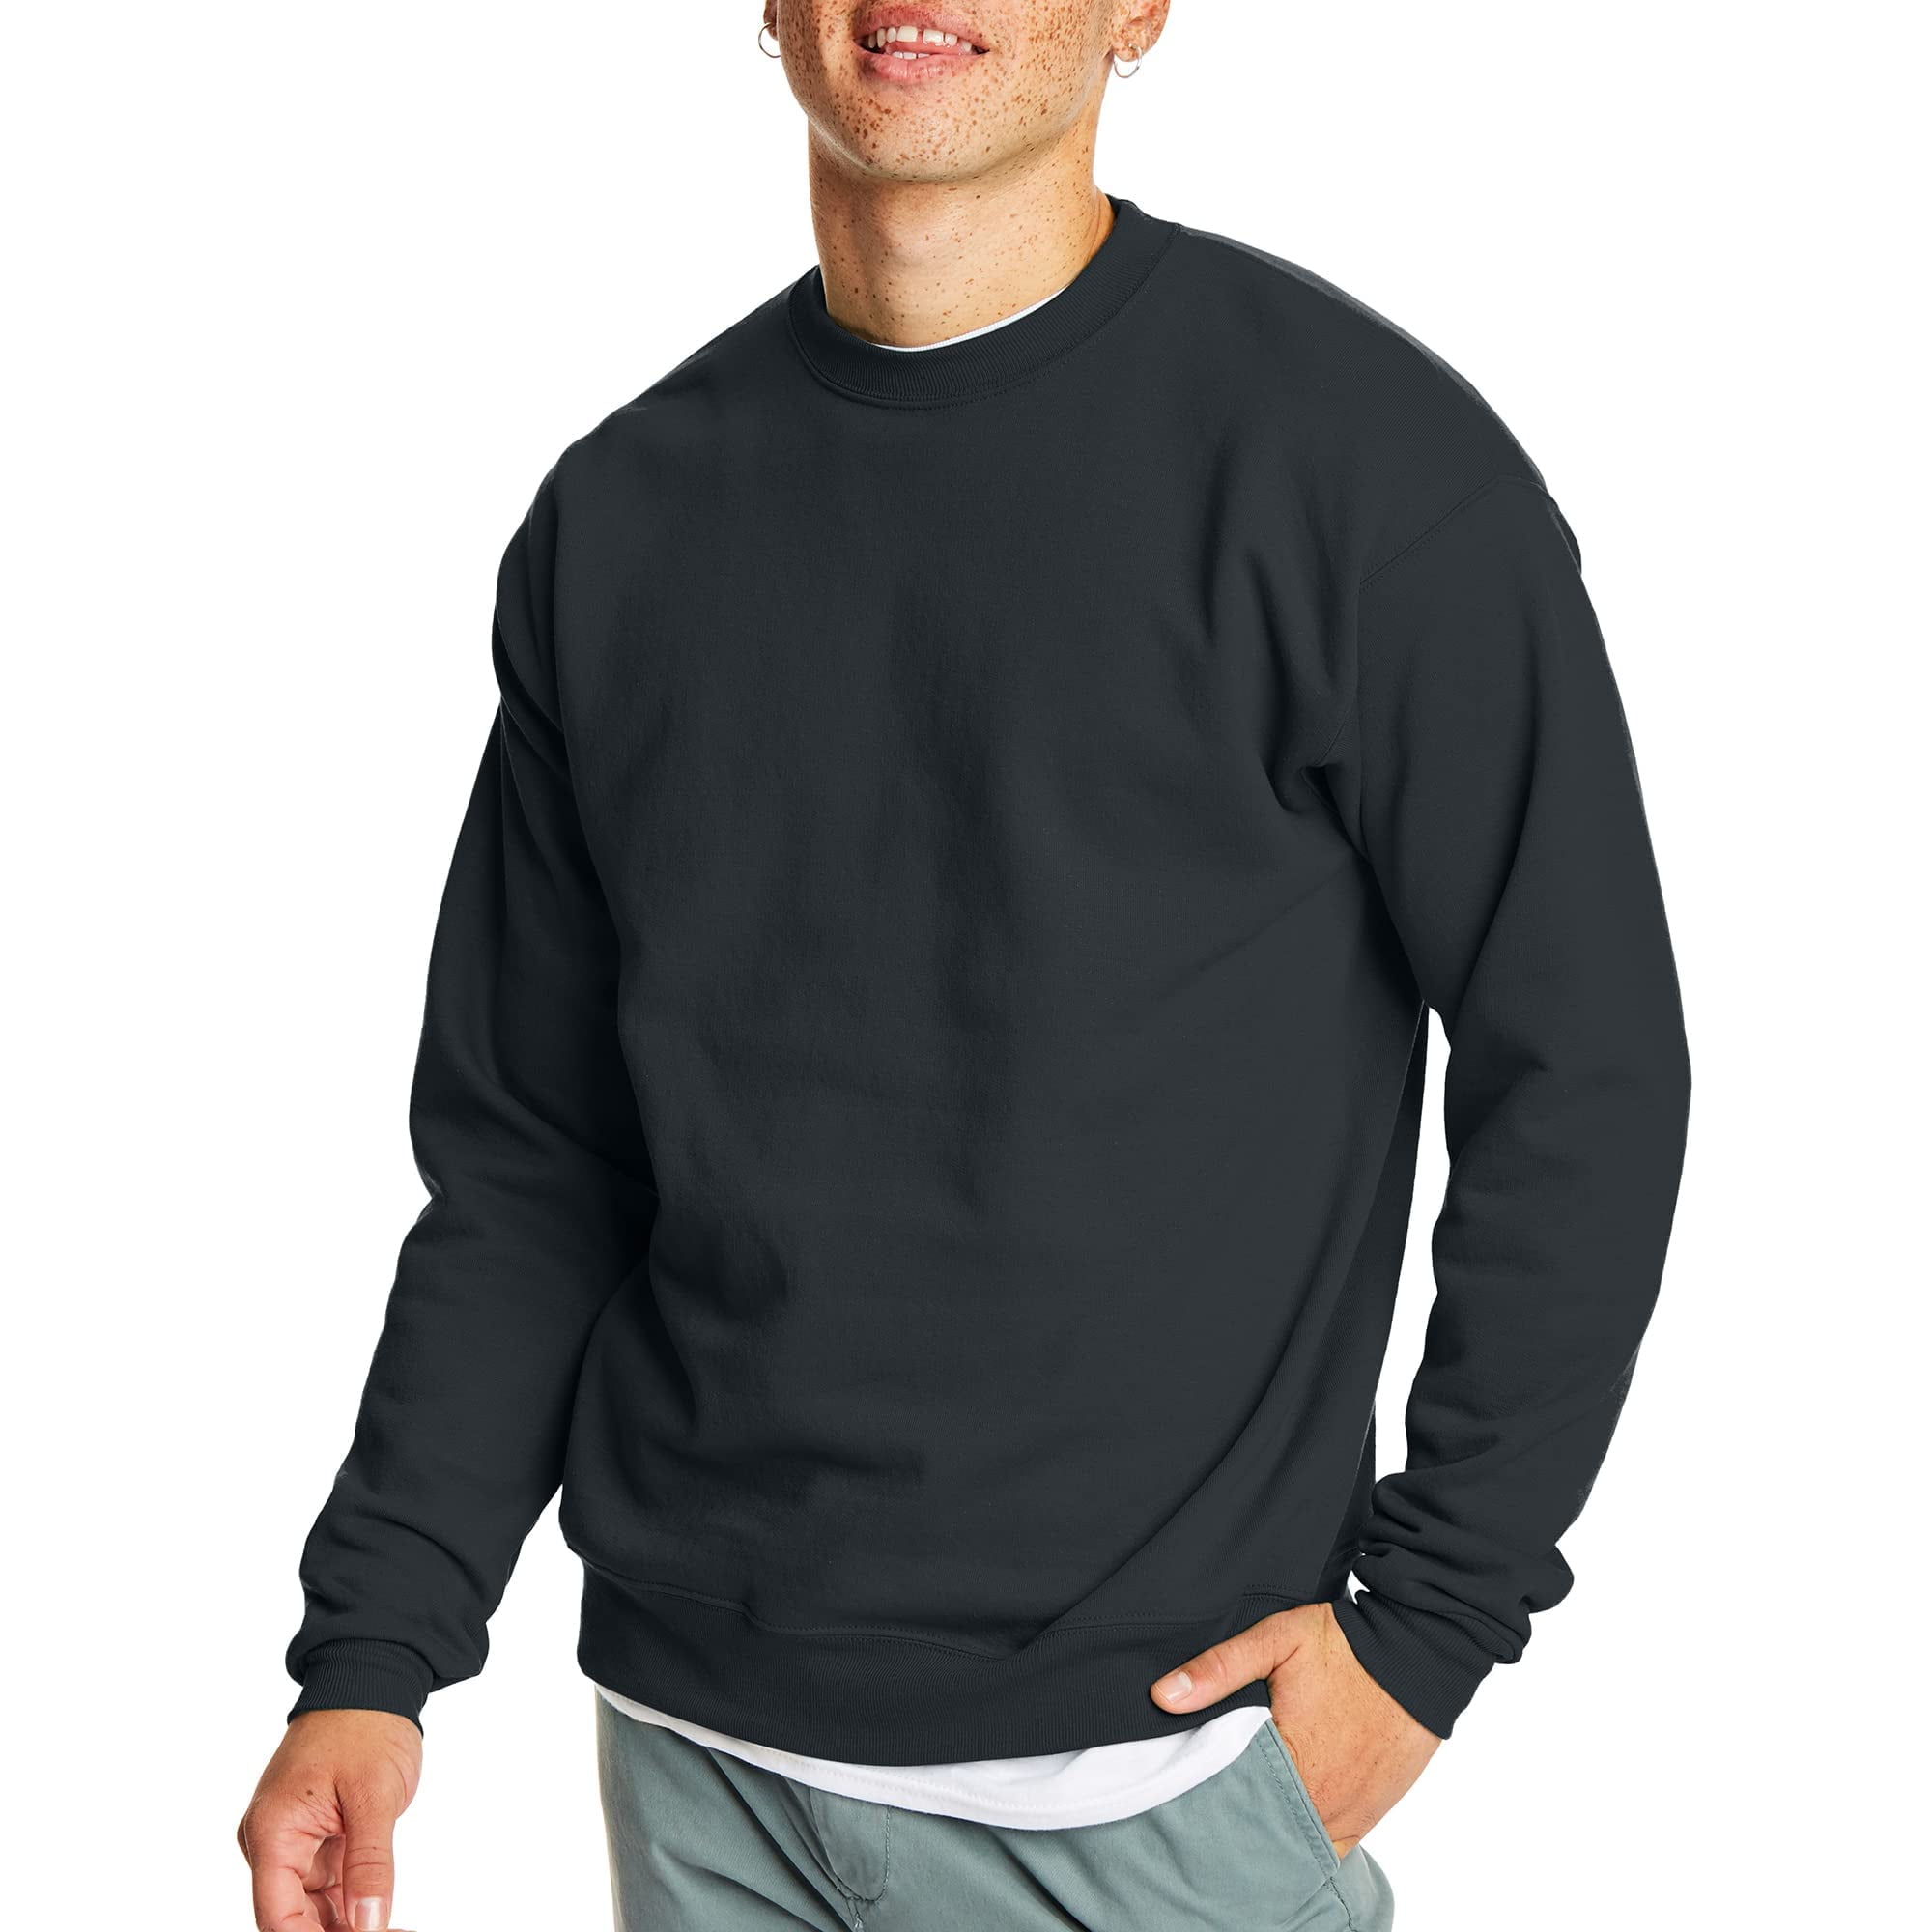 Hanes Men's ComfortBlend Sweatshirt, Black, Small Pack of 2 - Walmart.com